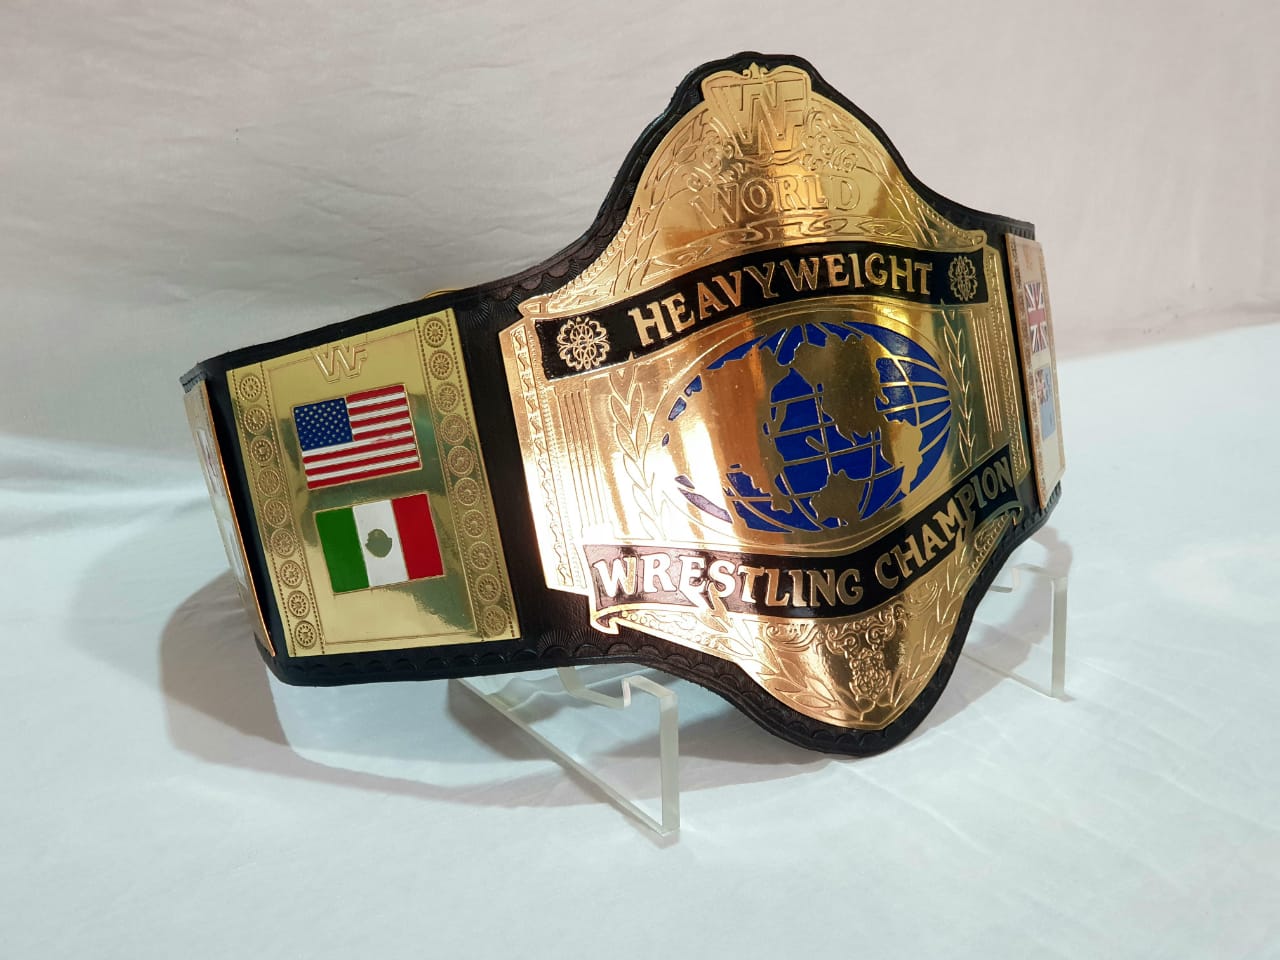 WWE World Heavyweight Wrestling Championship Leather Replica Belt Adult Size New 